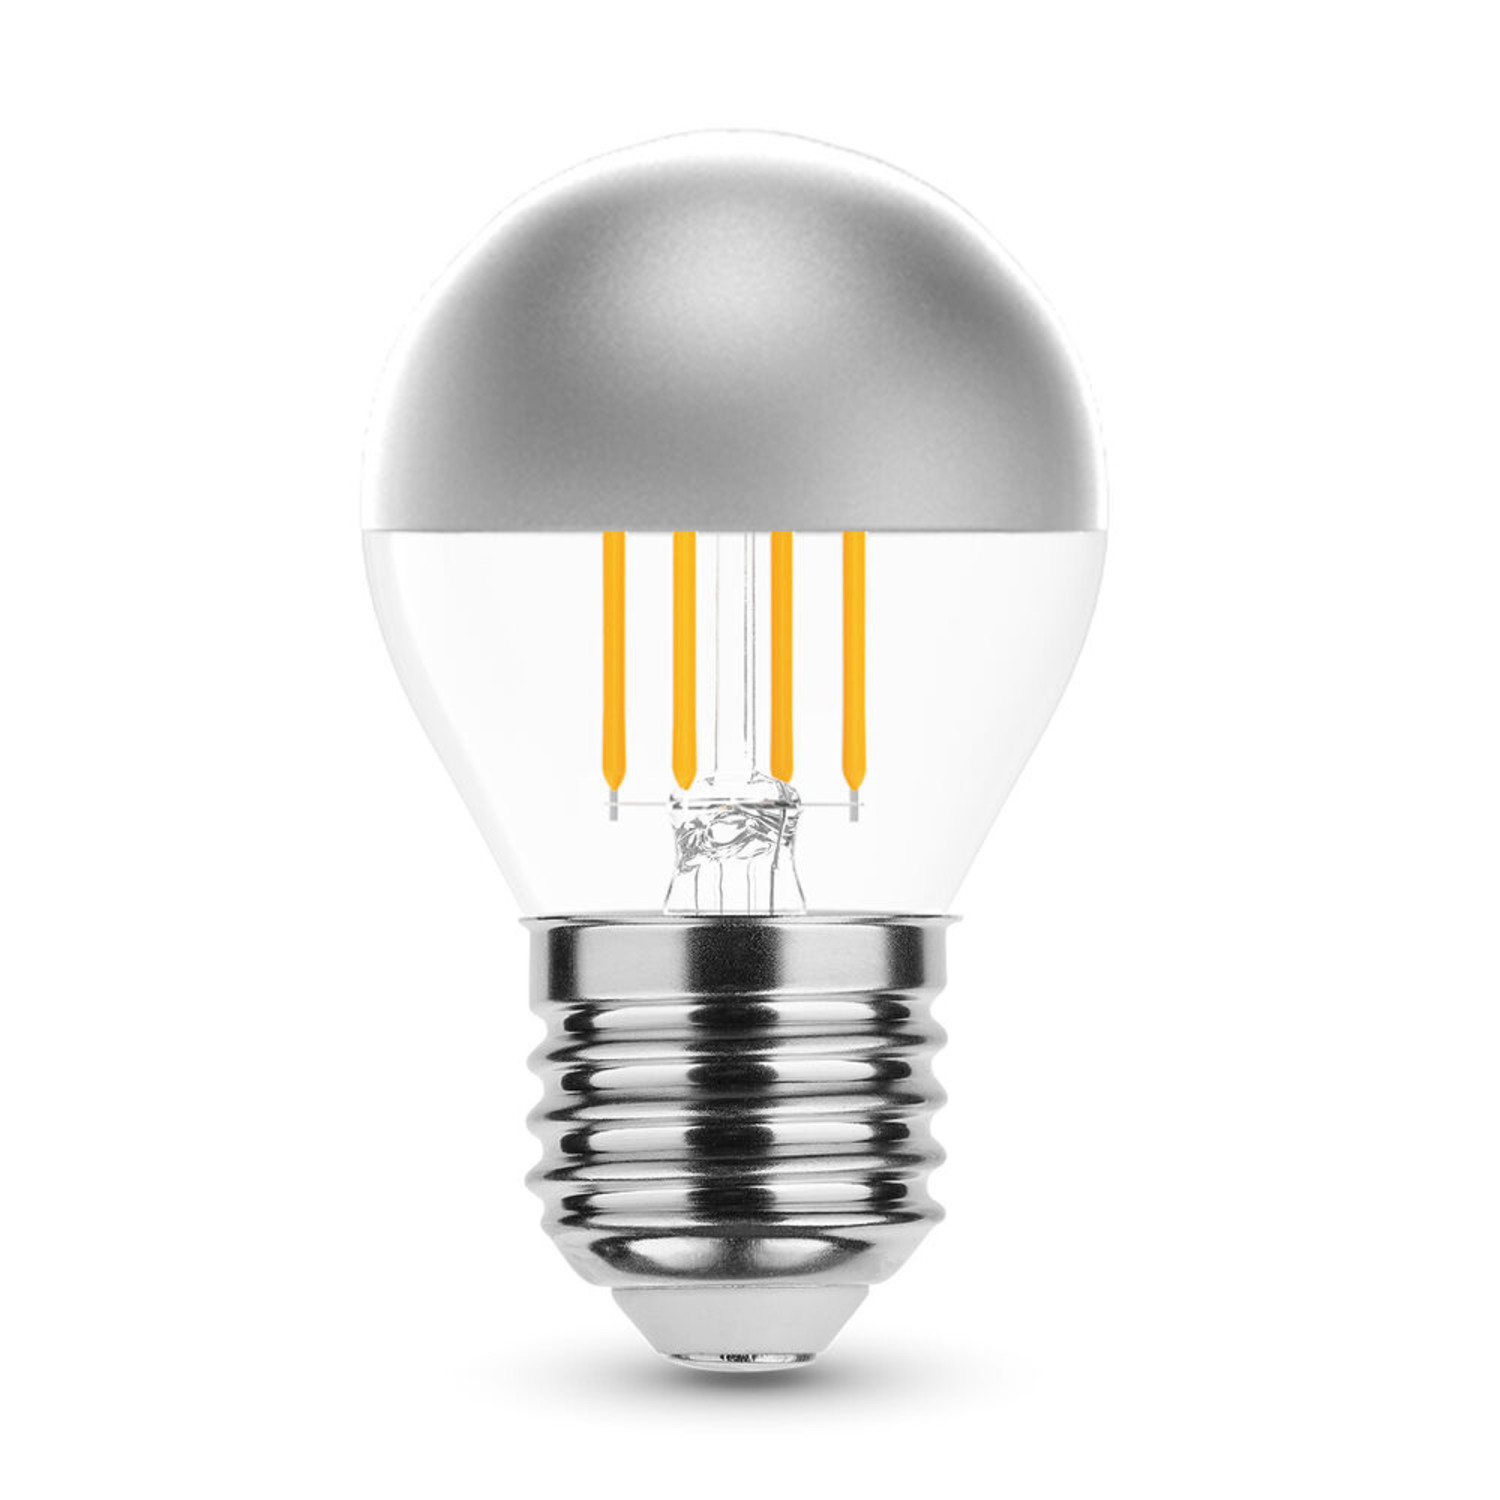 Genre Afgekeurd 鍔 LED Filament lamp E27 - P45 Kopspiegel - 4W - 2700K - Ledlichtdiscounter.nl